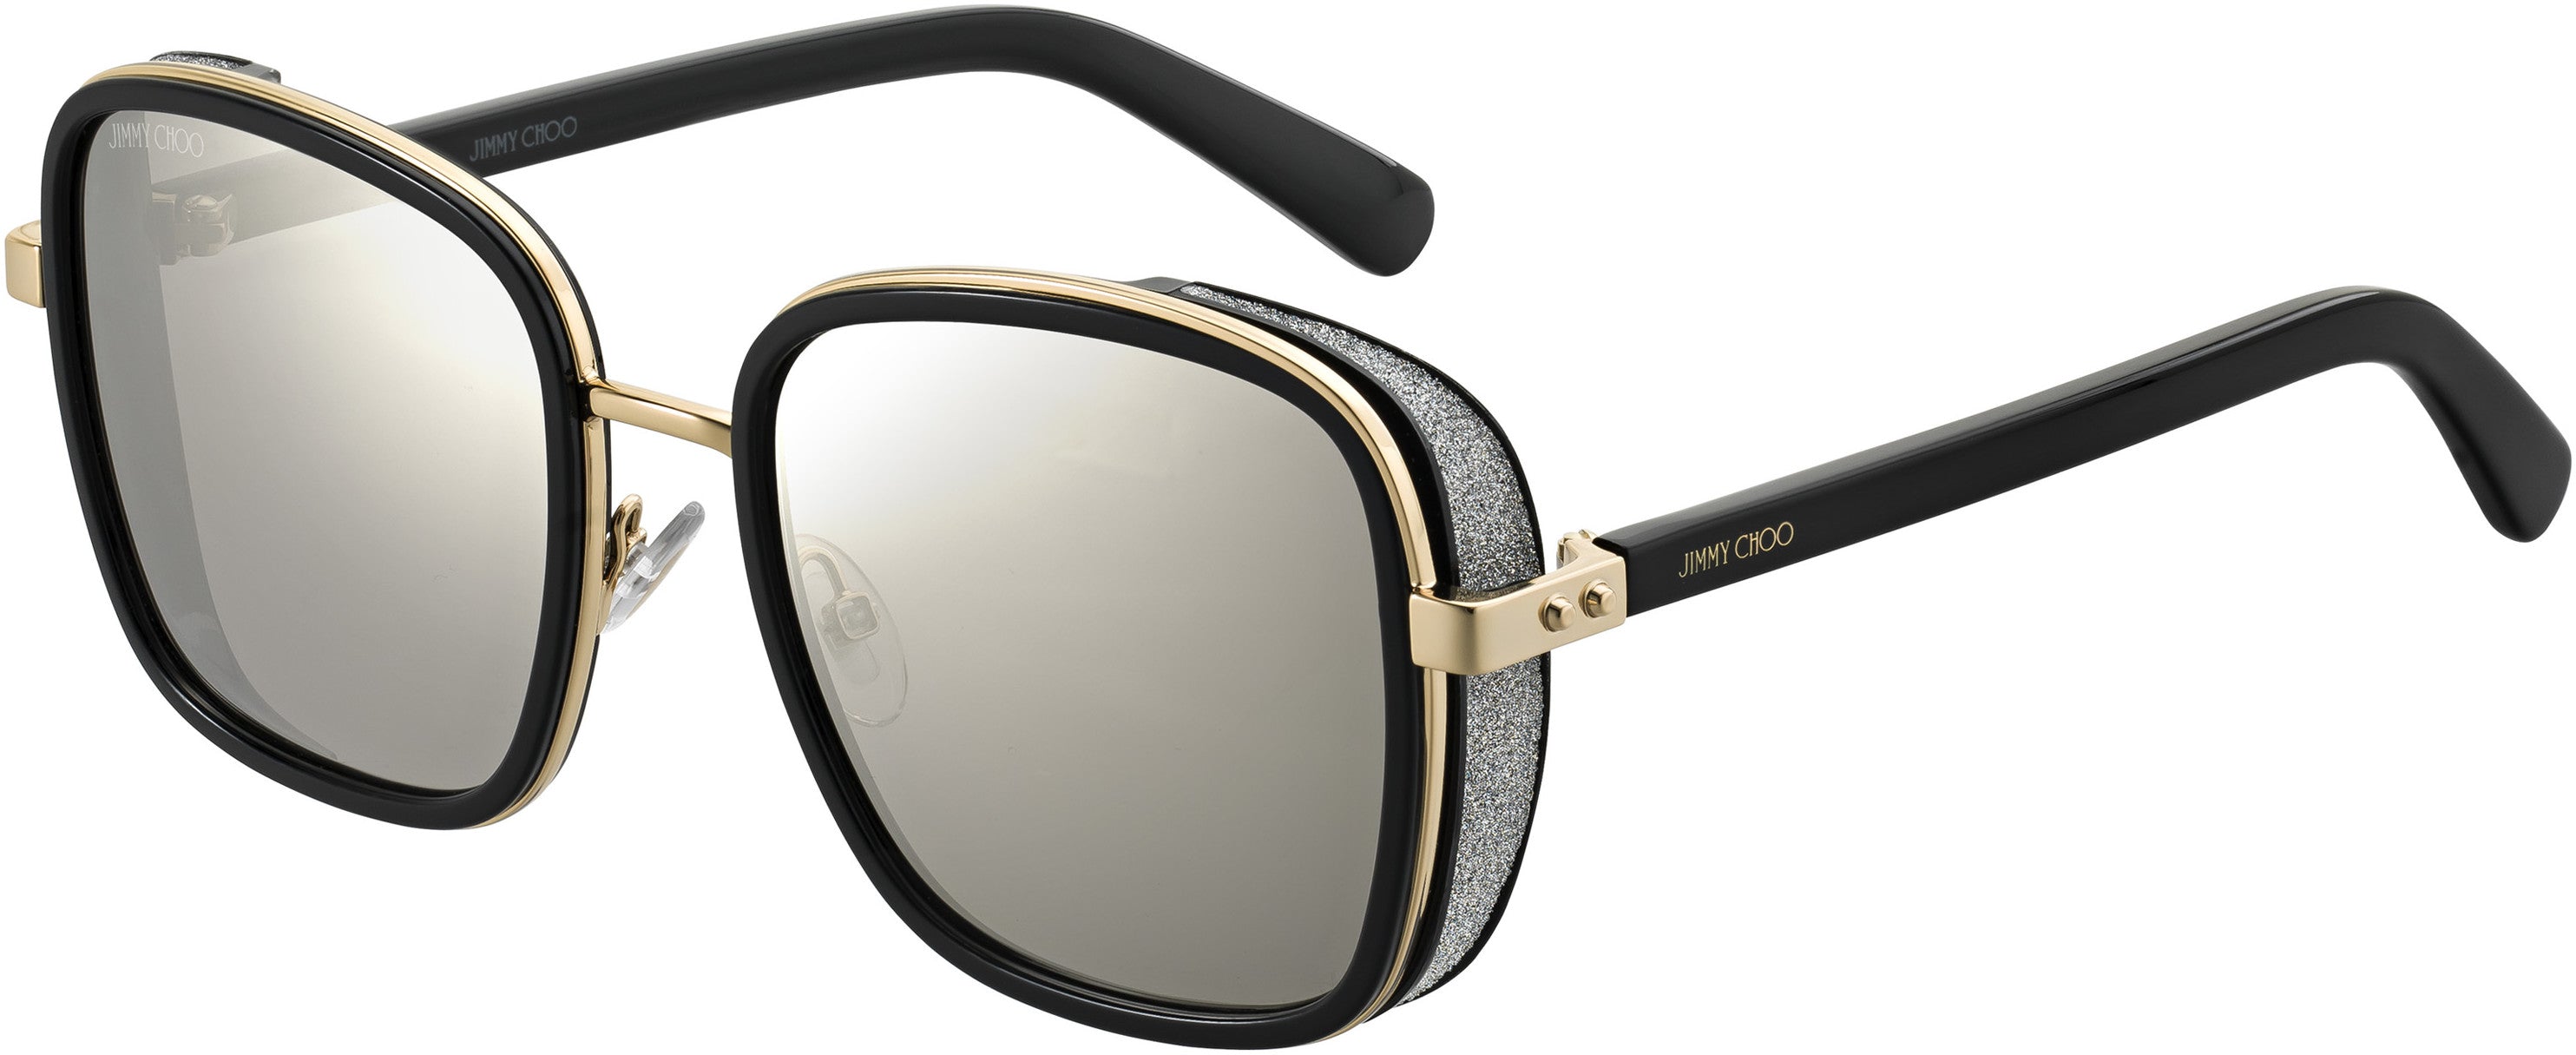 Jimmy Choo Elva/S Rectangular Sunglasses 02M2-02M2  Black Gold (T4 Silver Mirror)